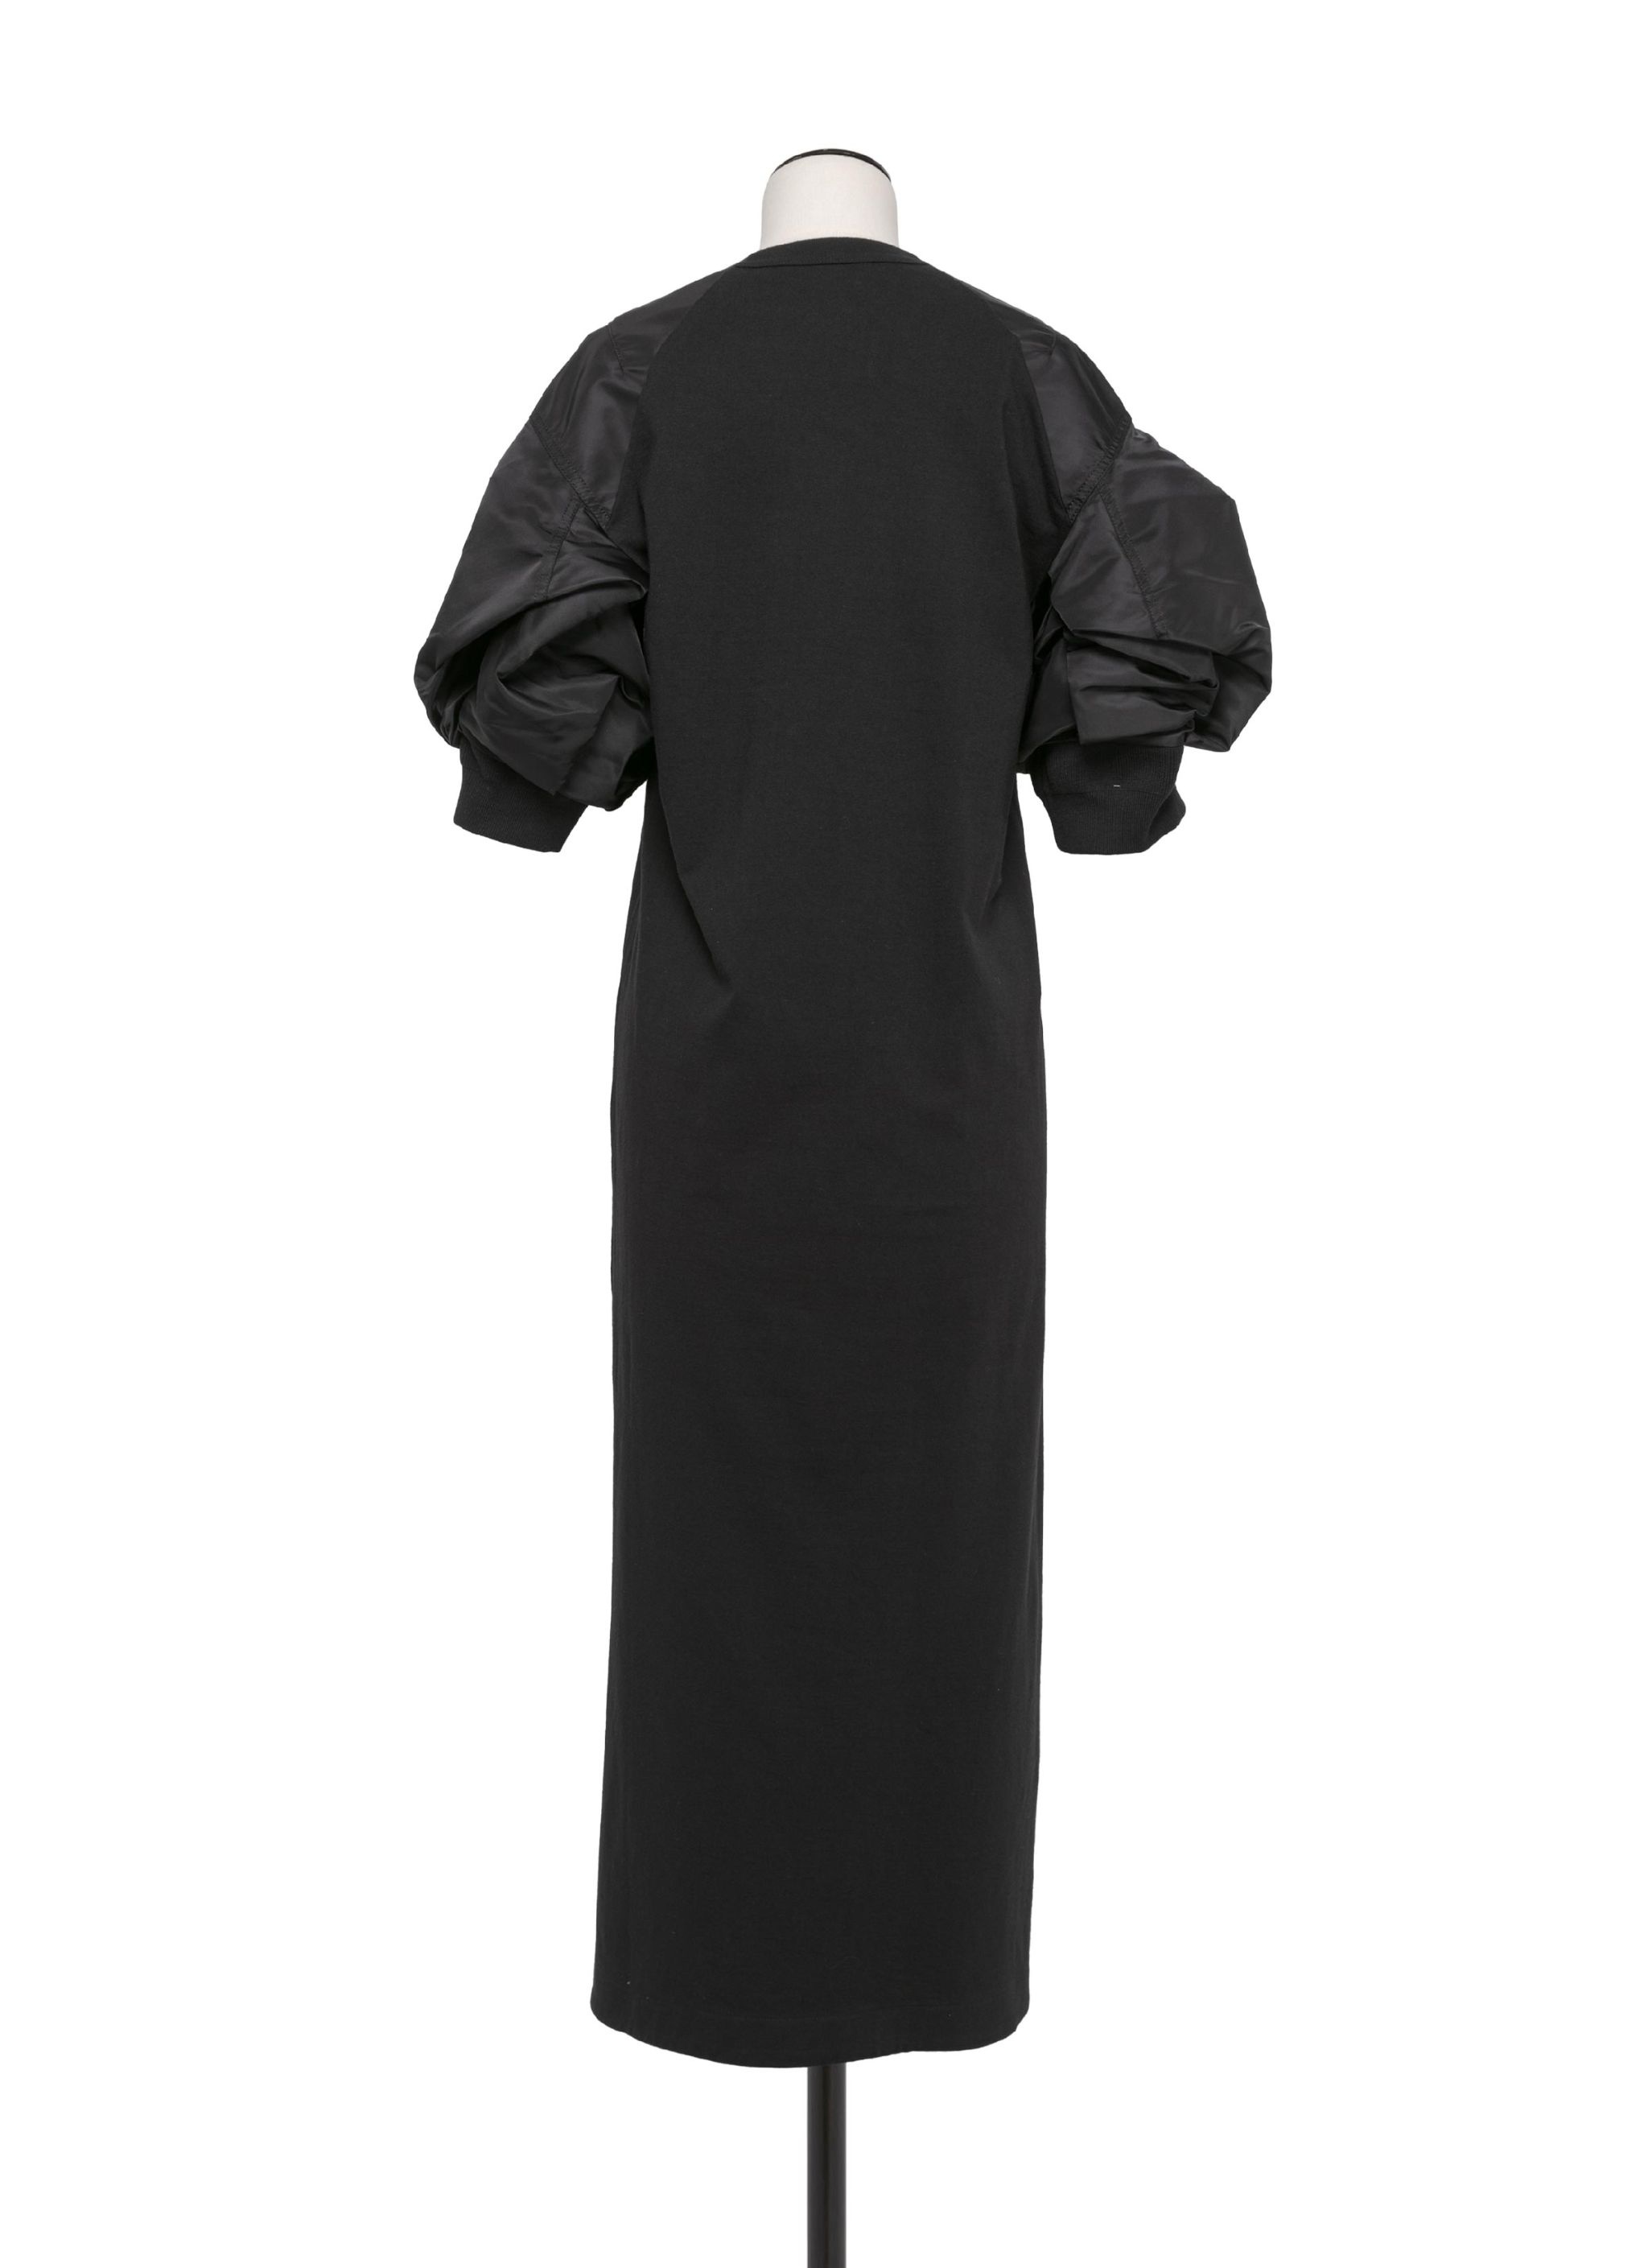 Nylon Twill x Cotton Jersey Dress - 3